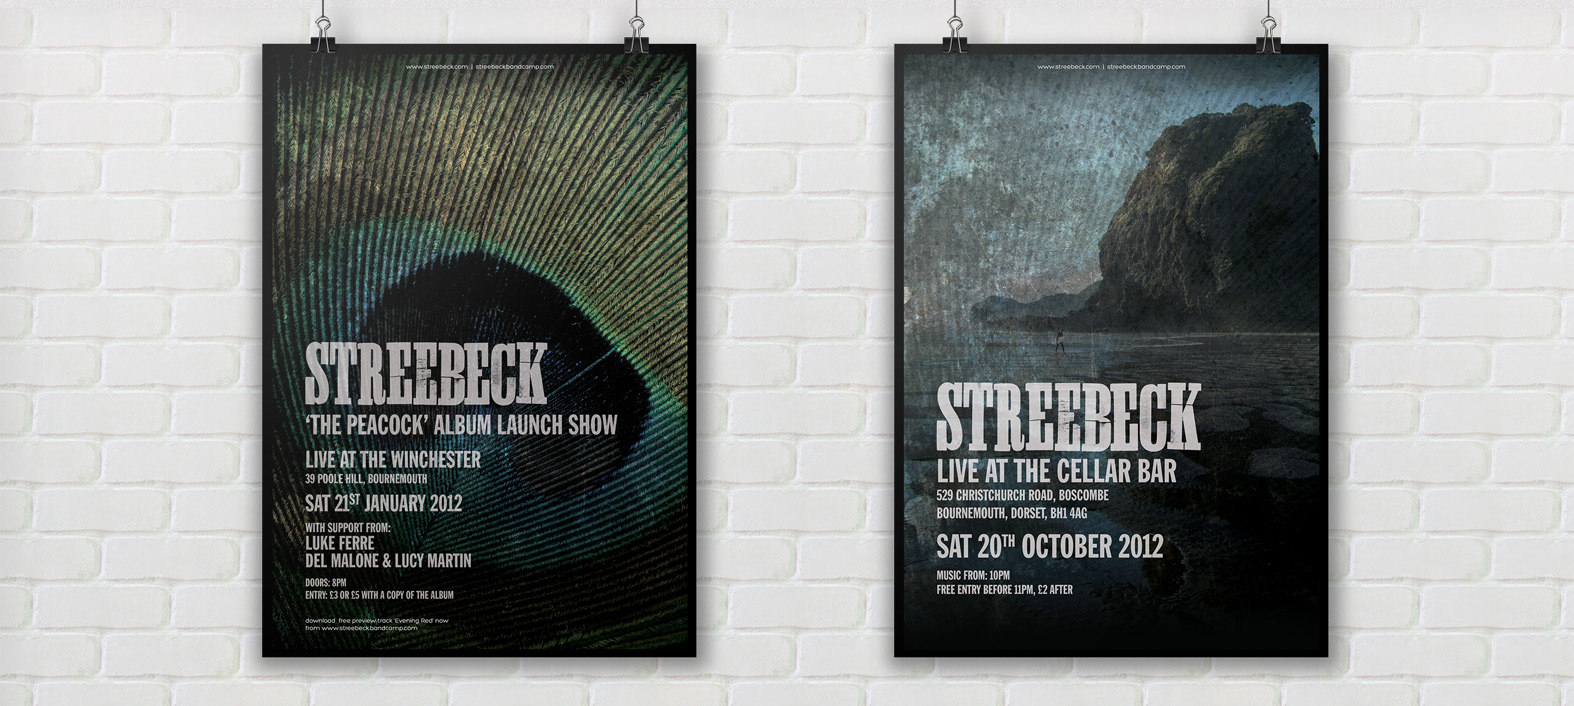 poster-designs-streebeck